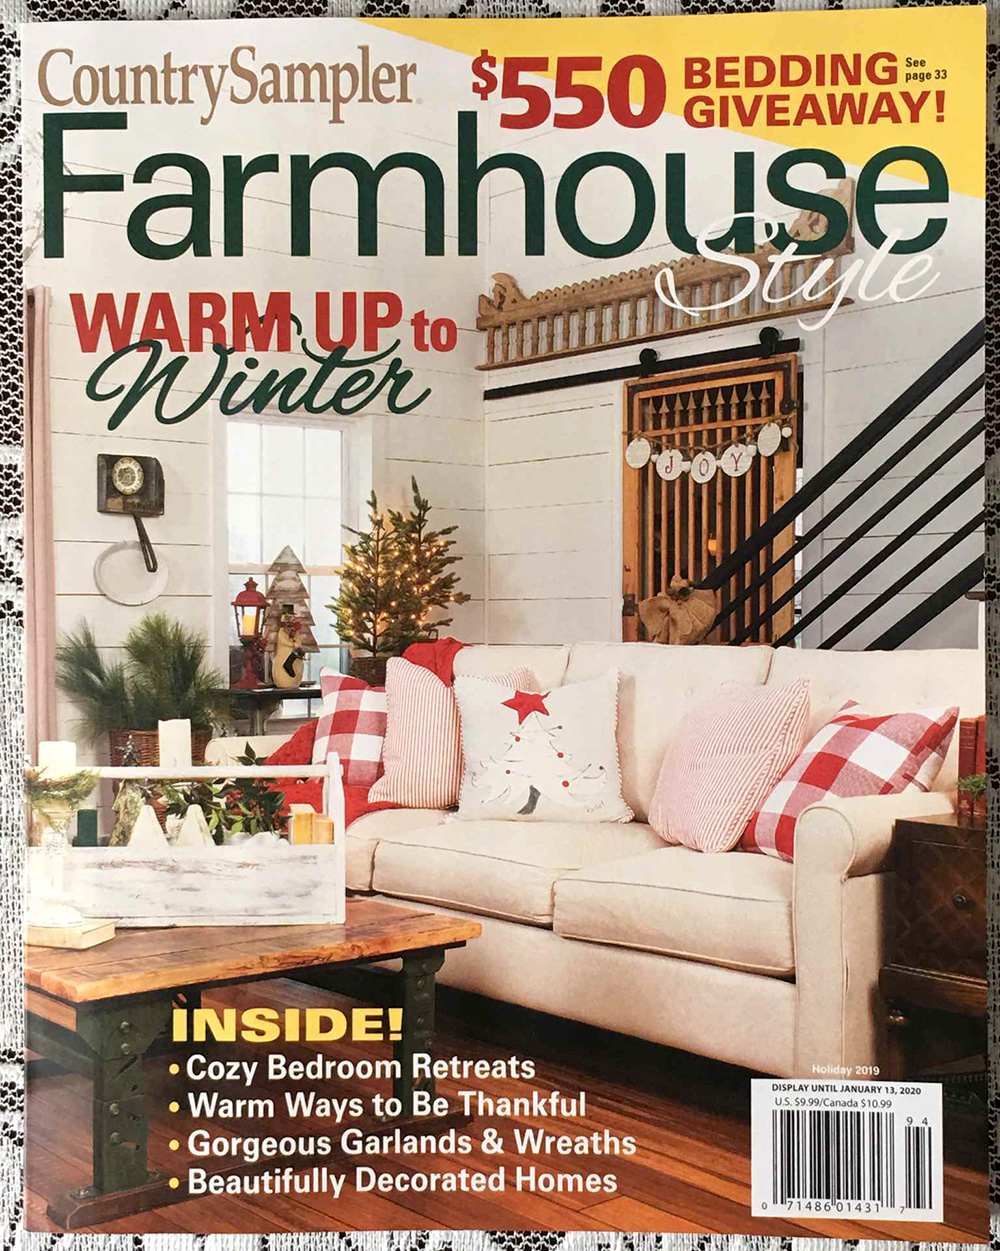 Farmhouse Style Magazine blog mention